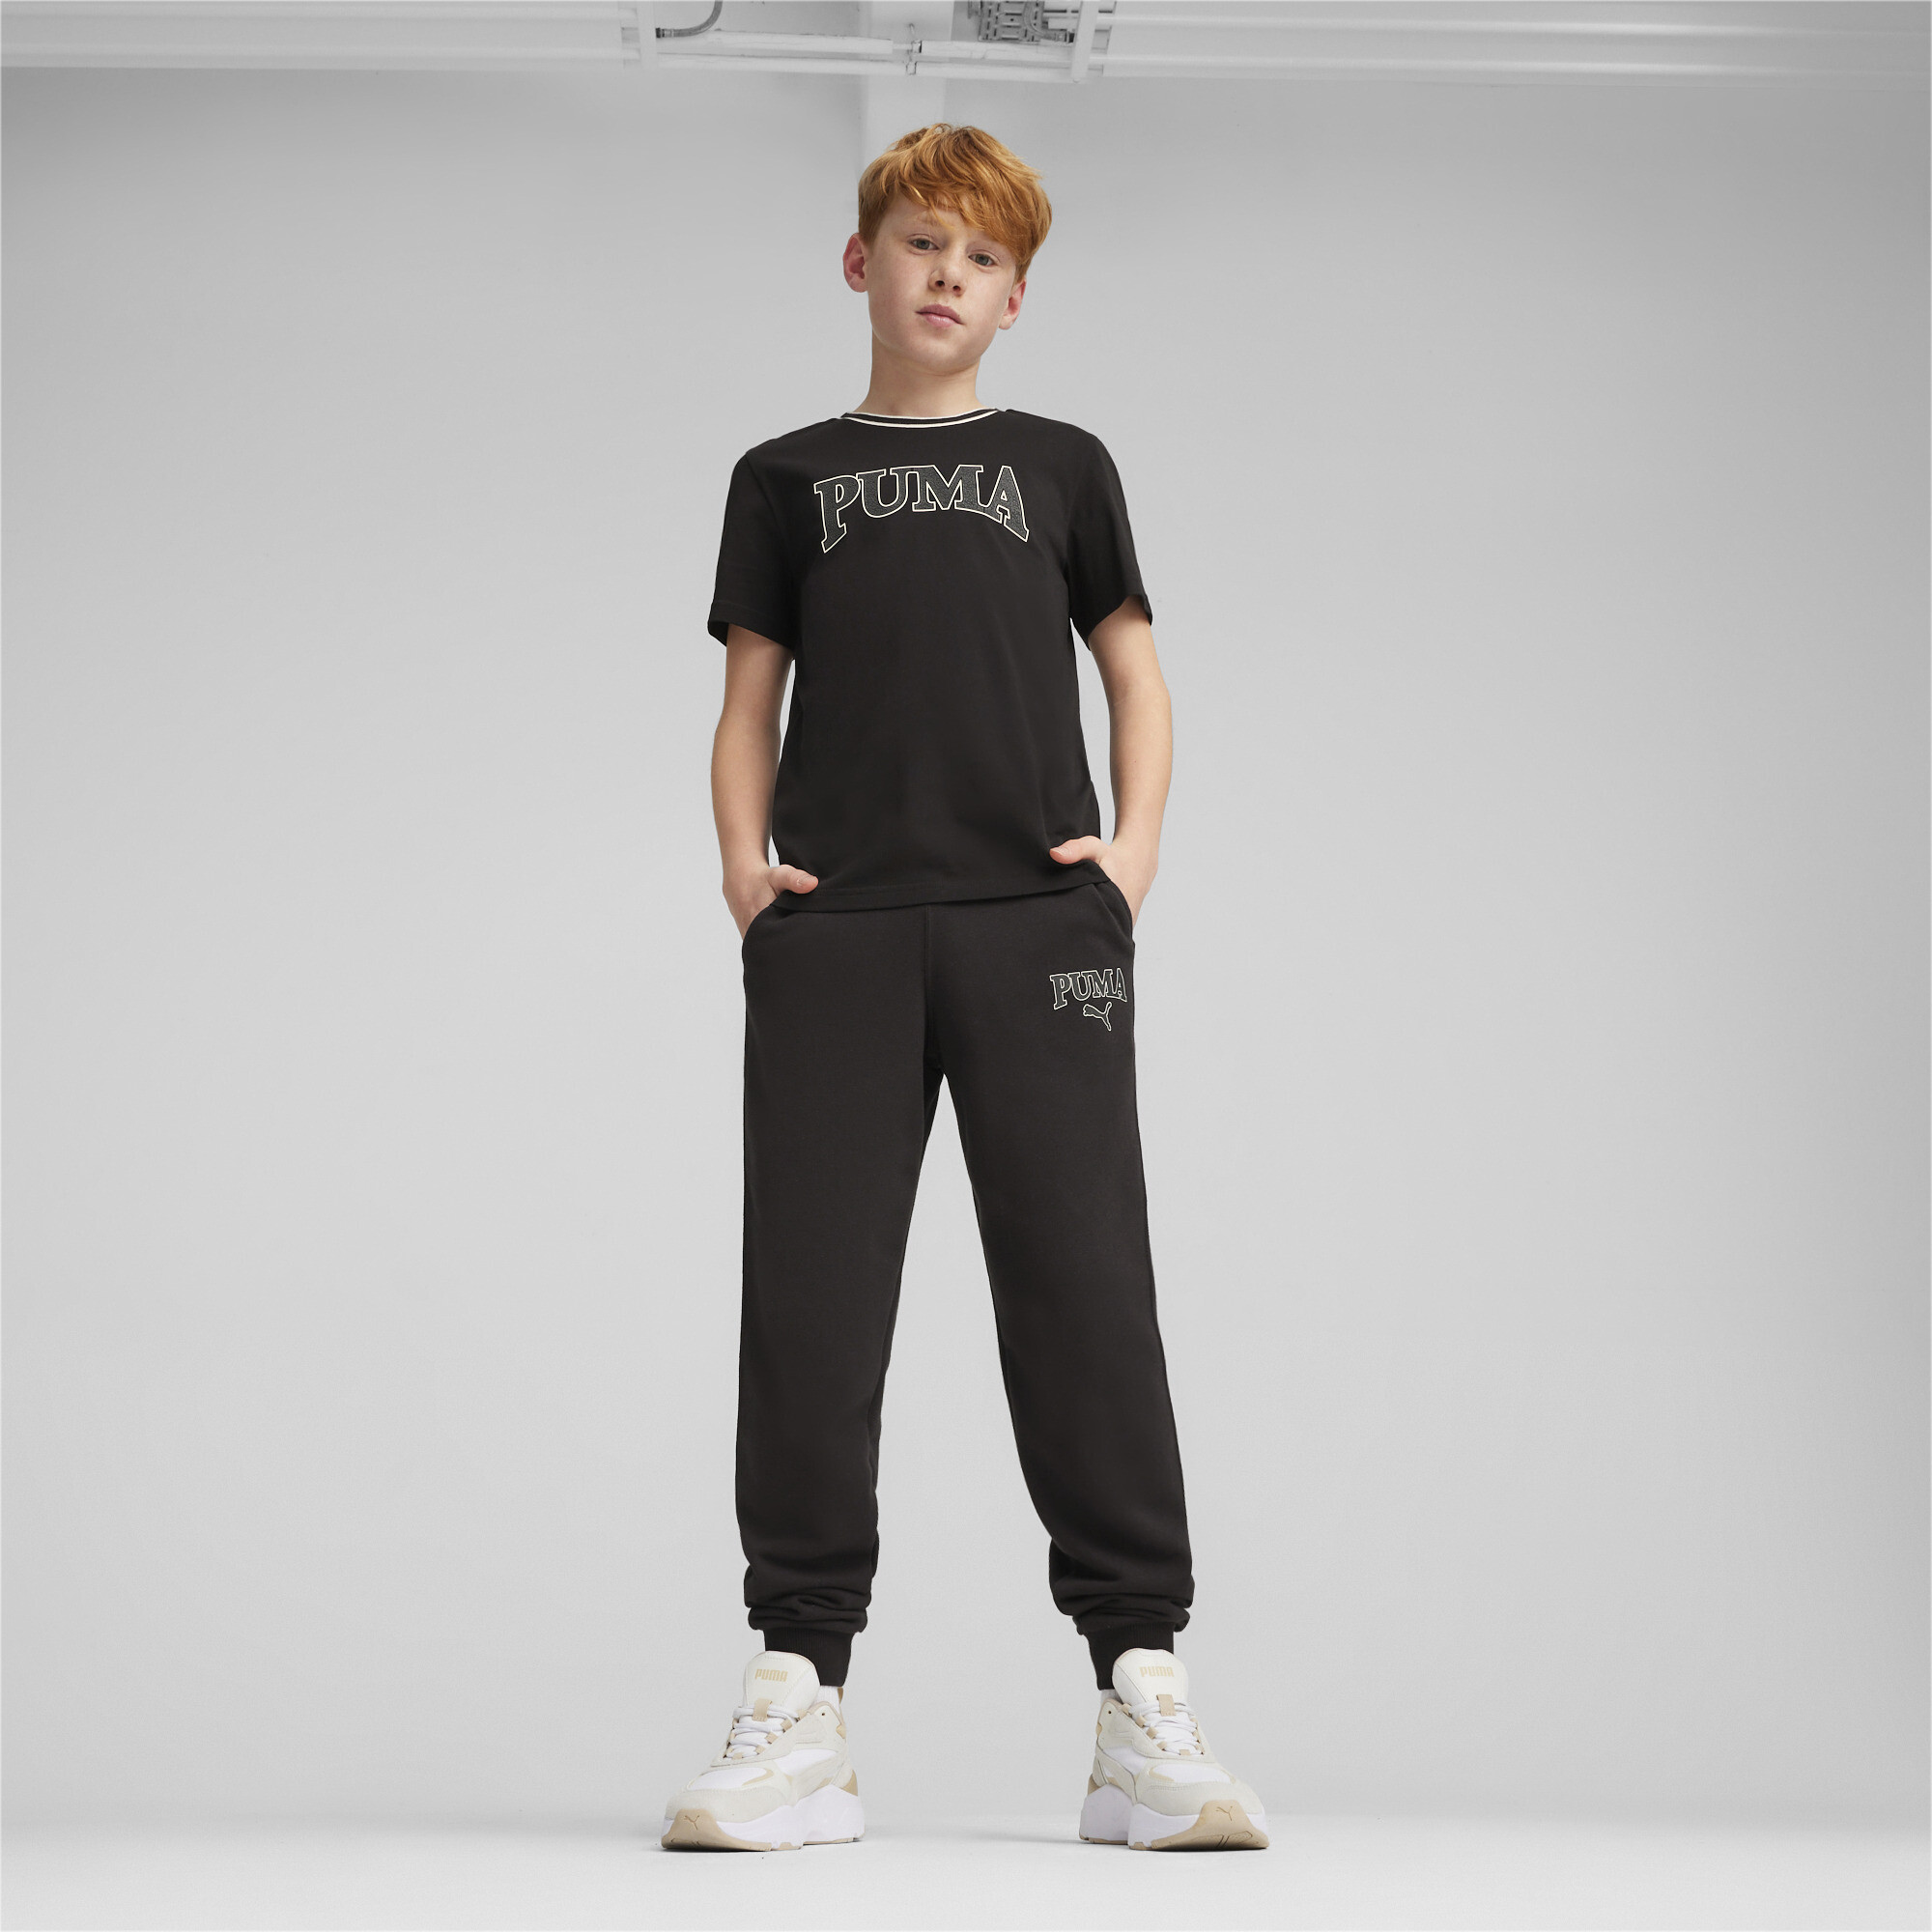 Men's Puma SQUAD Youth Sweatpants, Black, Size 11-12Y, Age